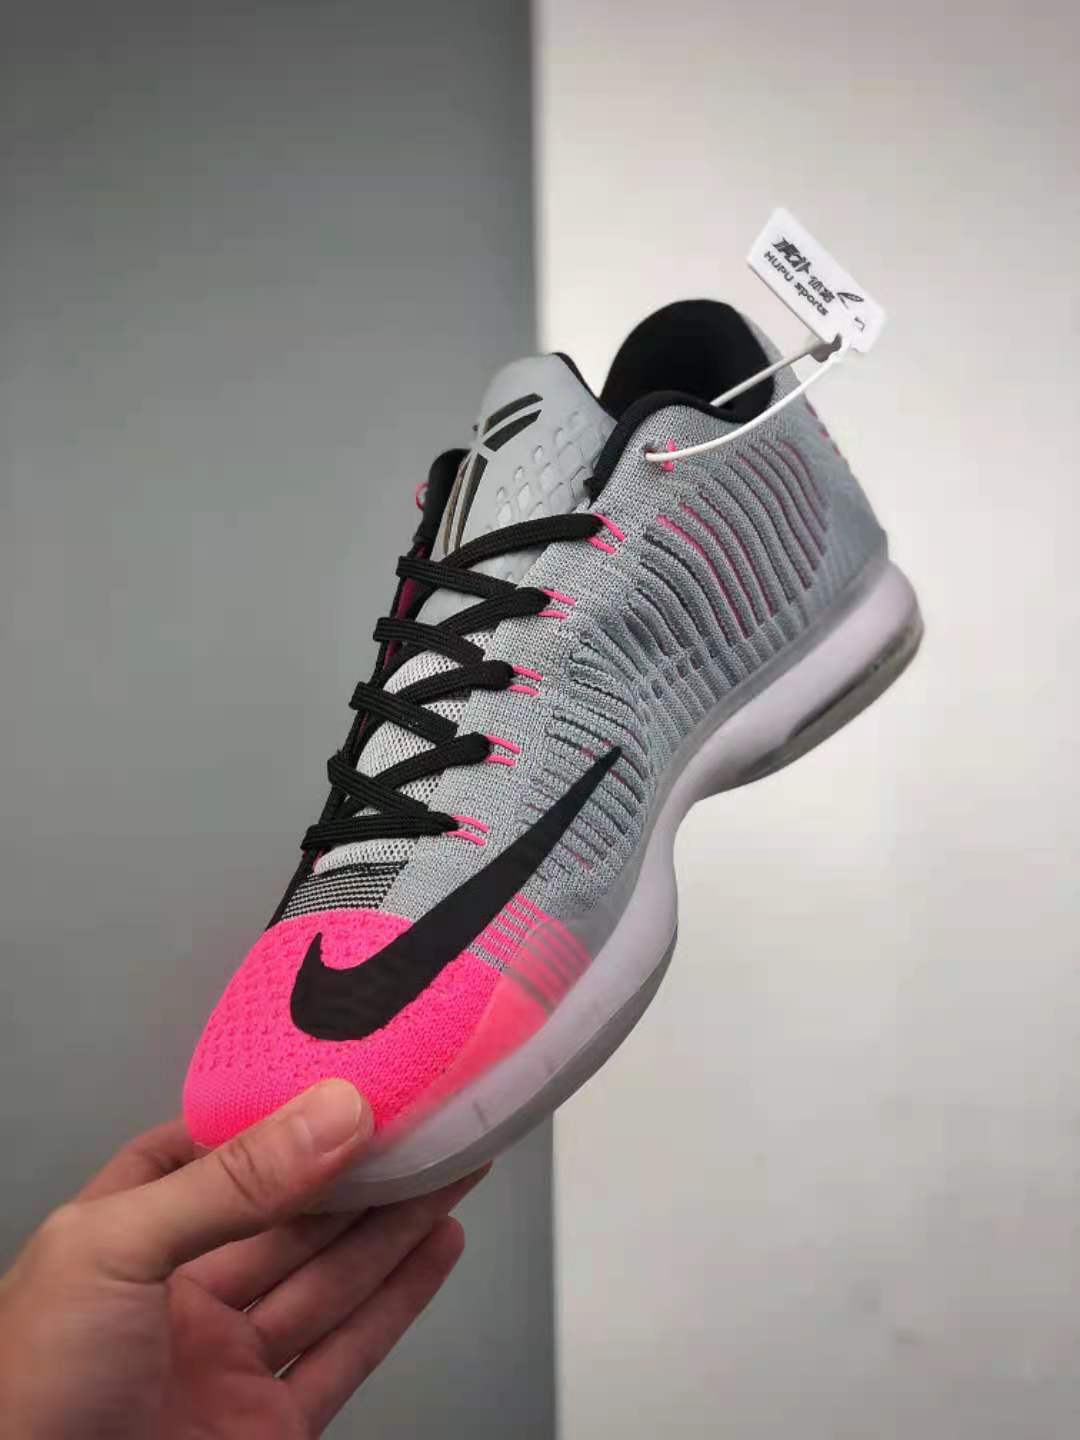 Nike Kobe X Elite Low Mambacurial Black Wolf Grey Flash Pink Basketball Shoes 747212 010